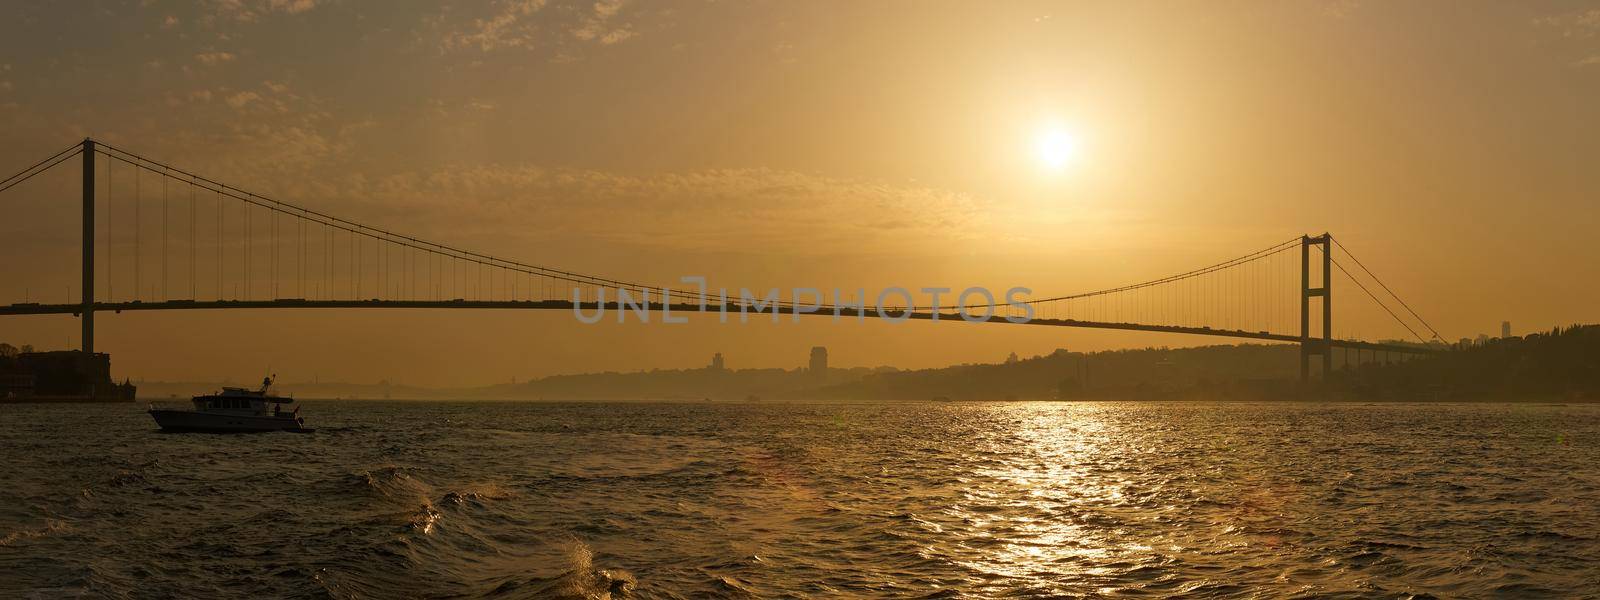 The Bosphorus Bridge connecting Europe and Asia. by sarymsakov